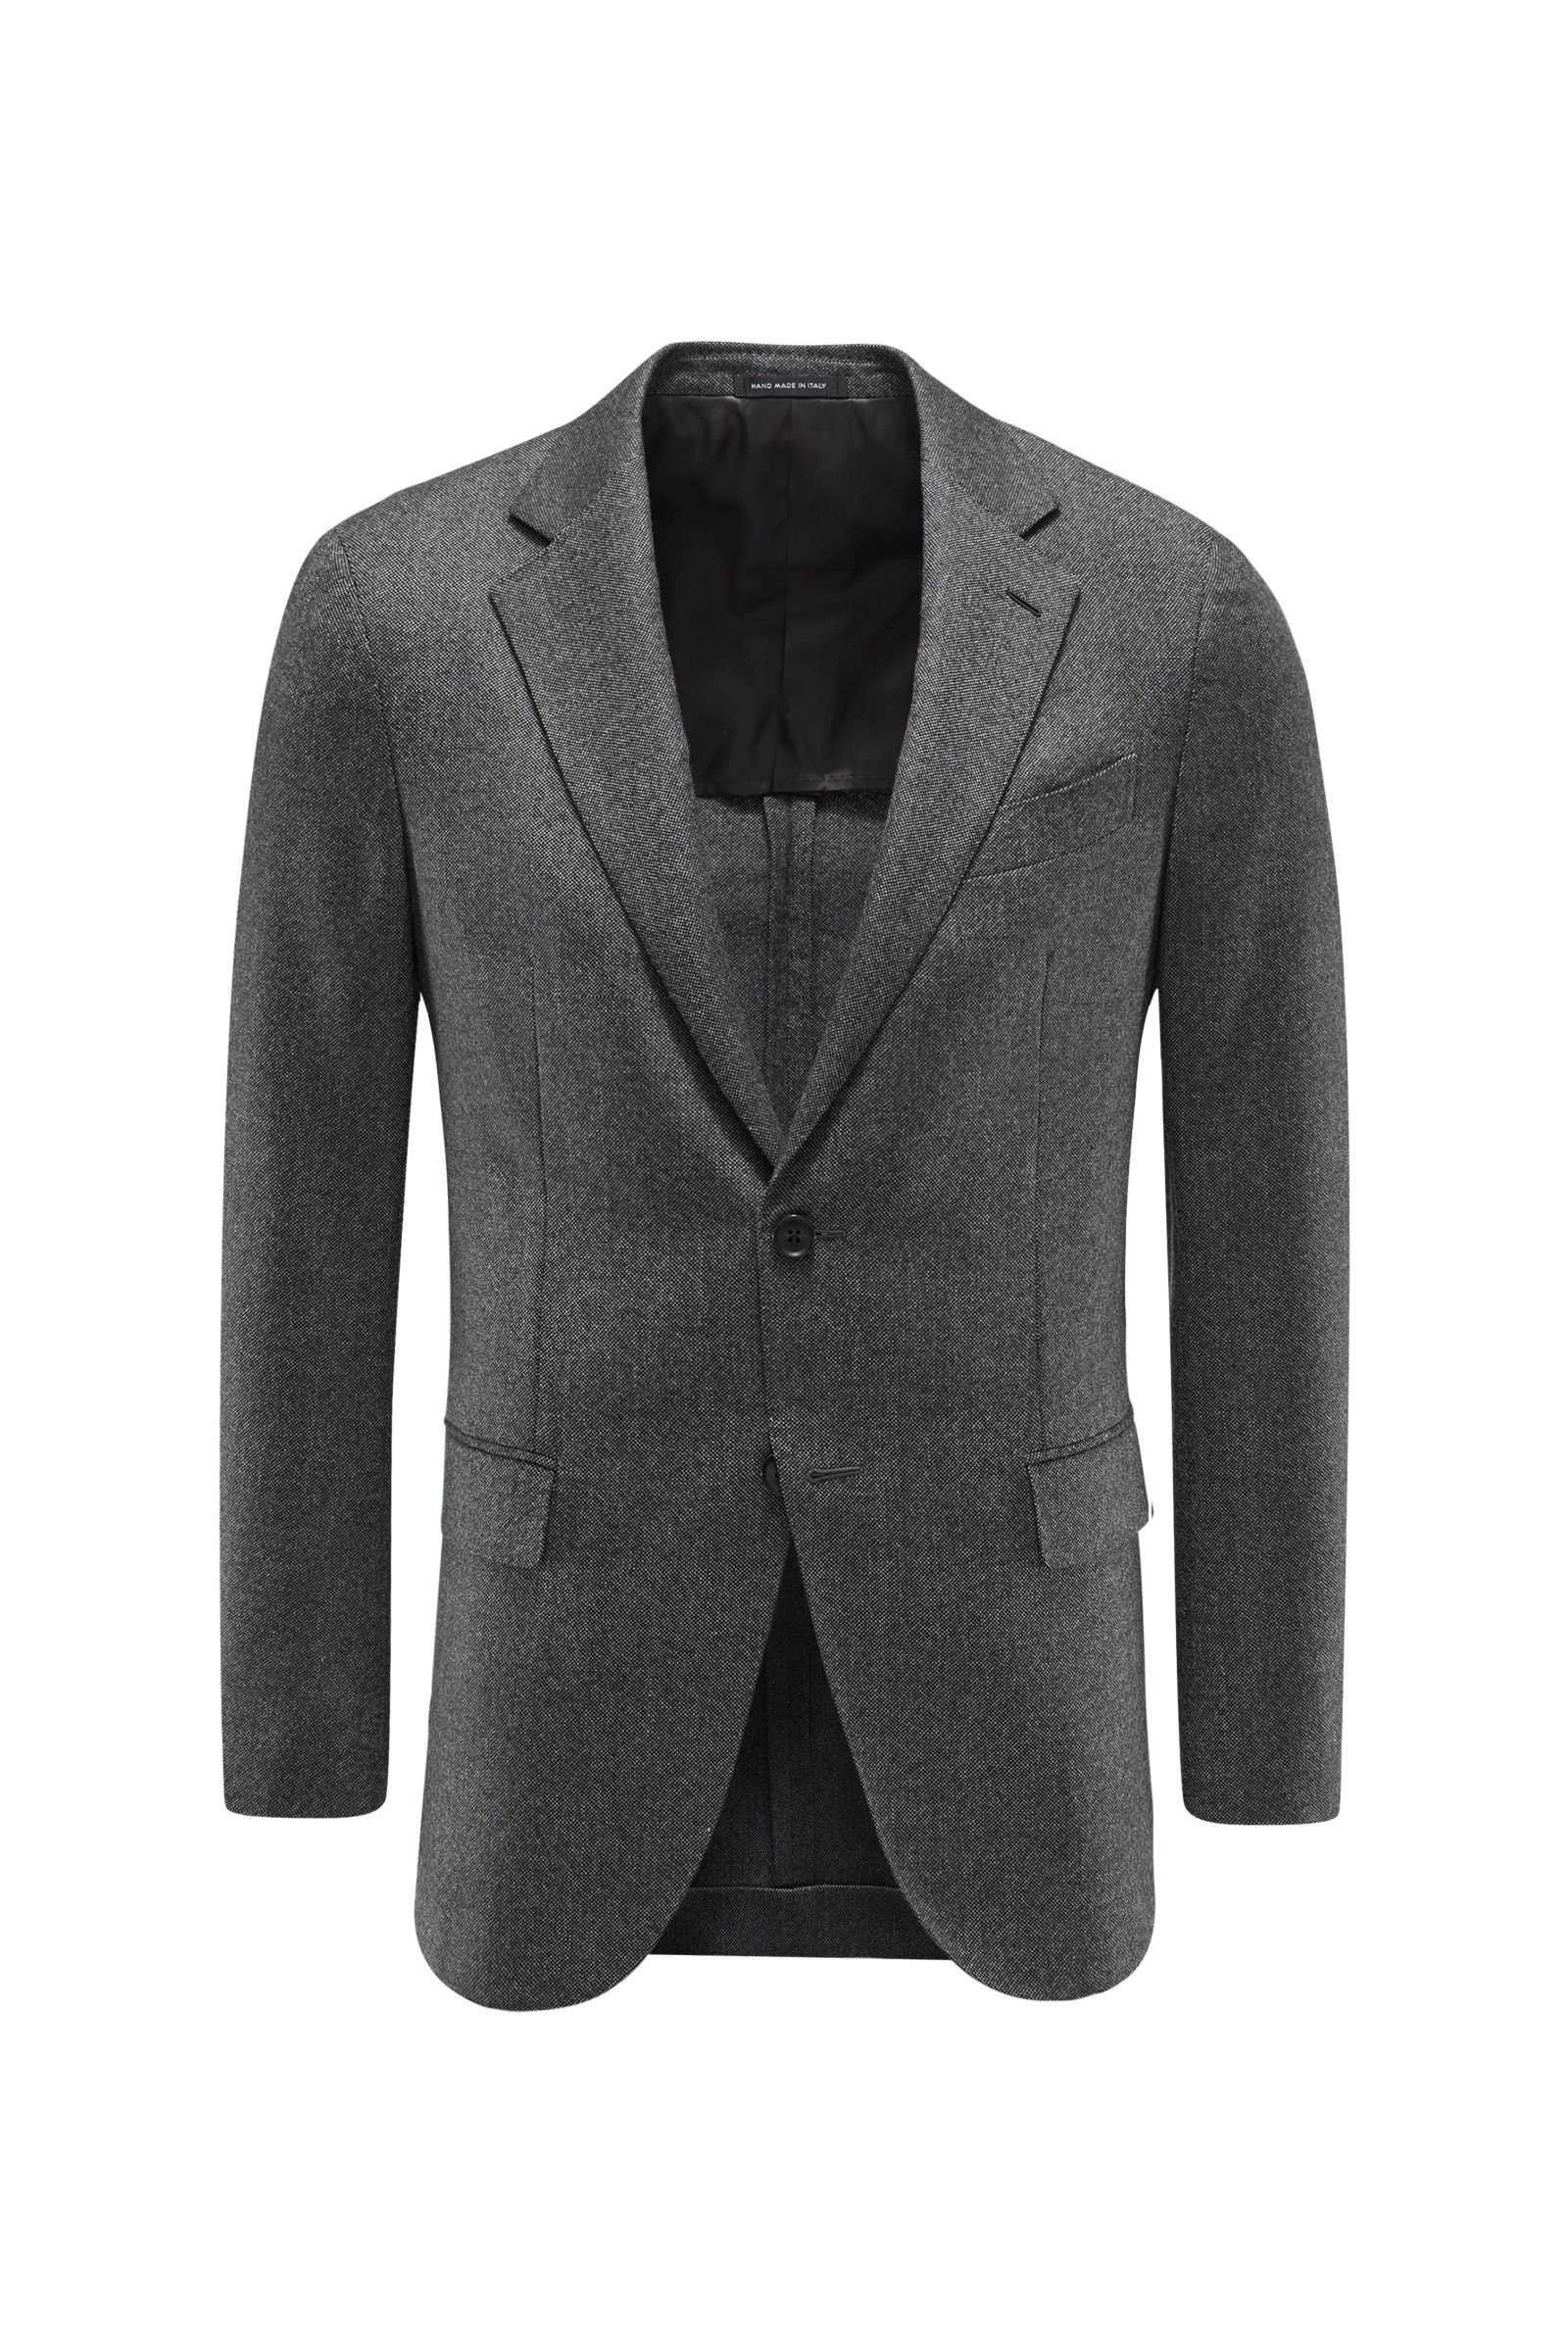 Smart-casual jacket dark grey patterned